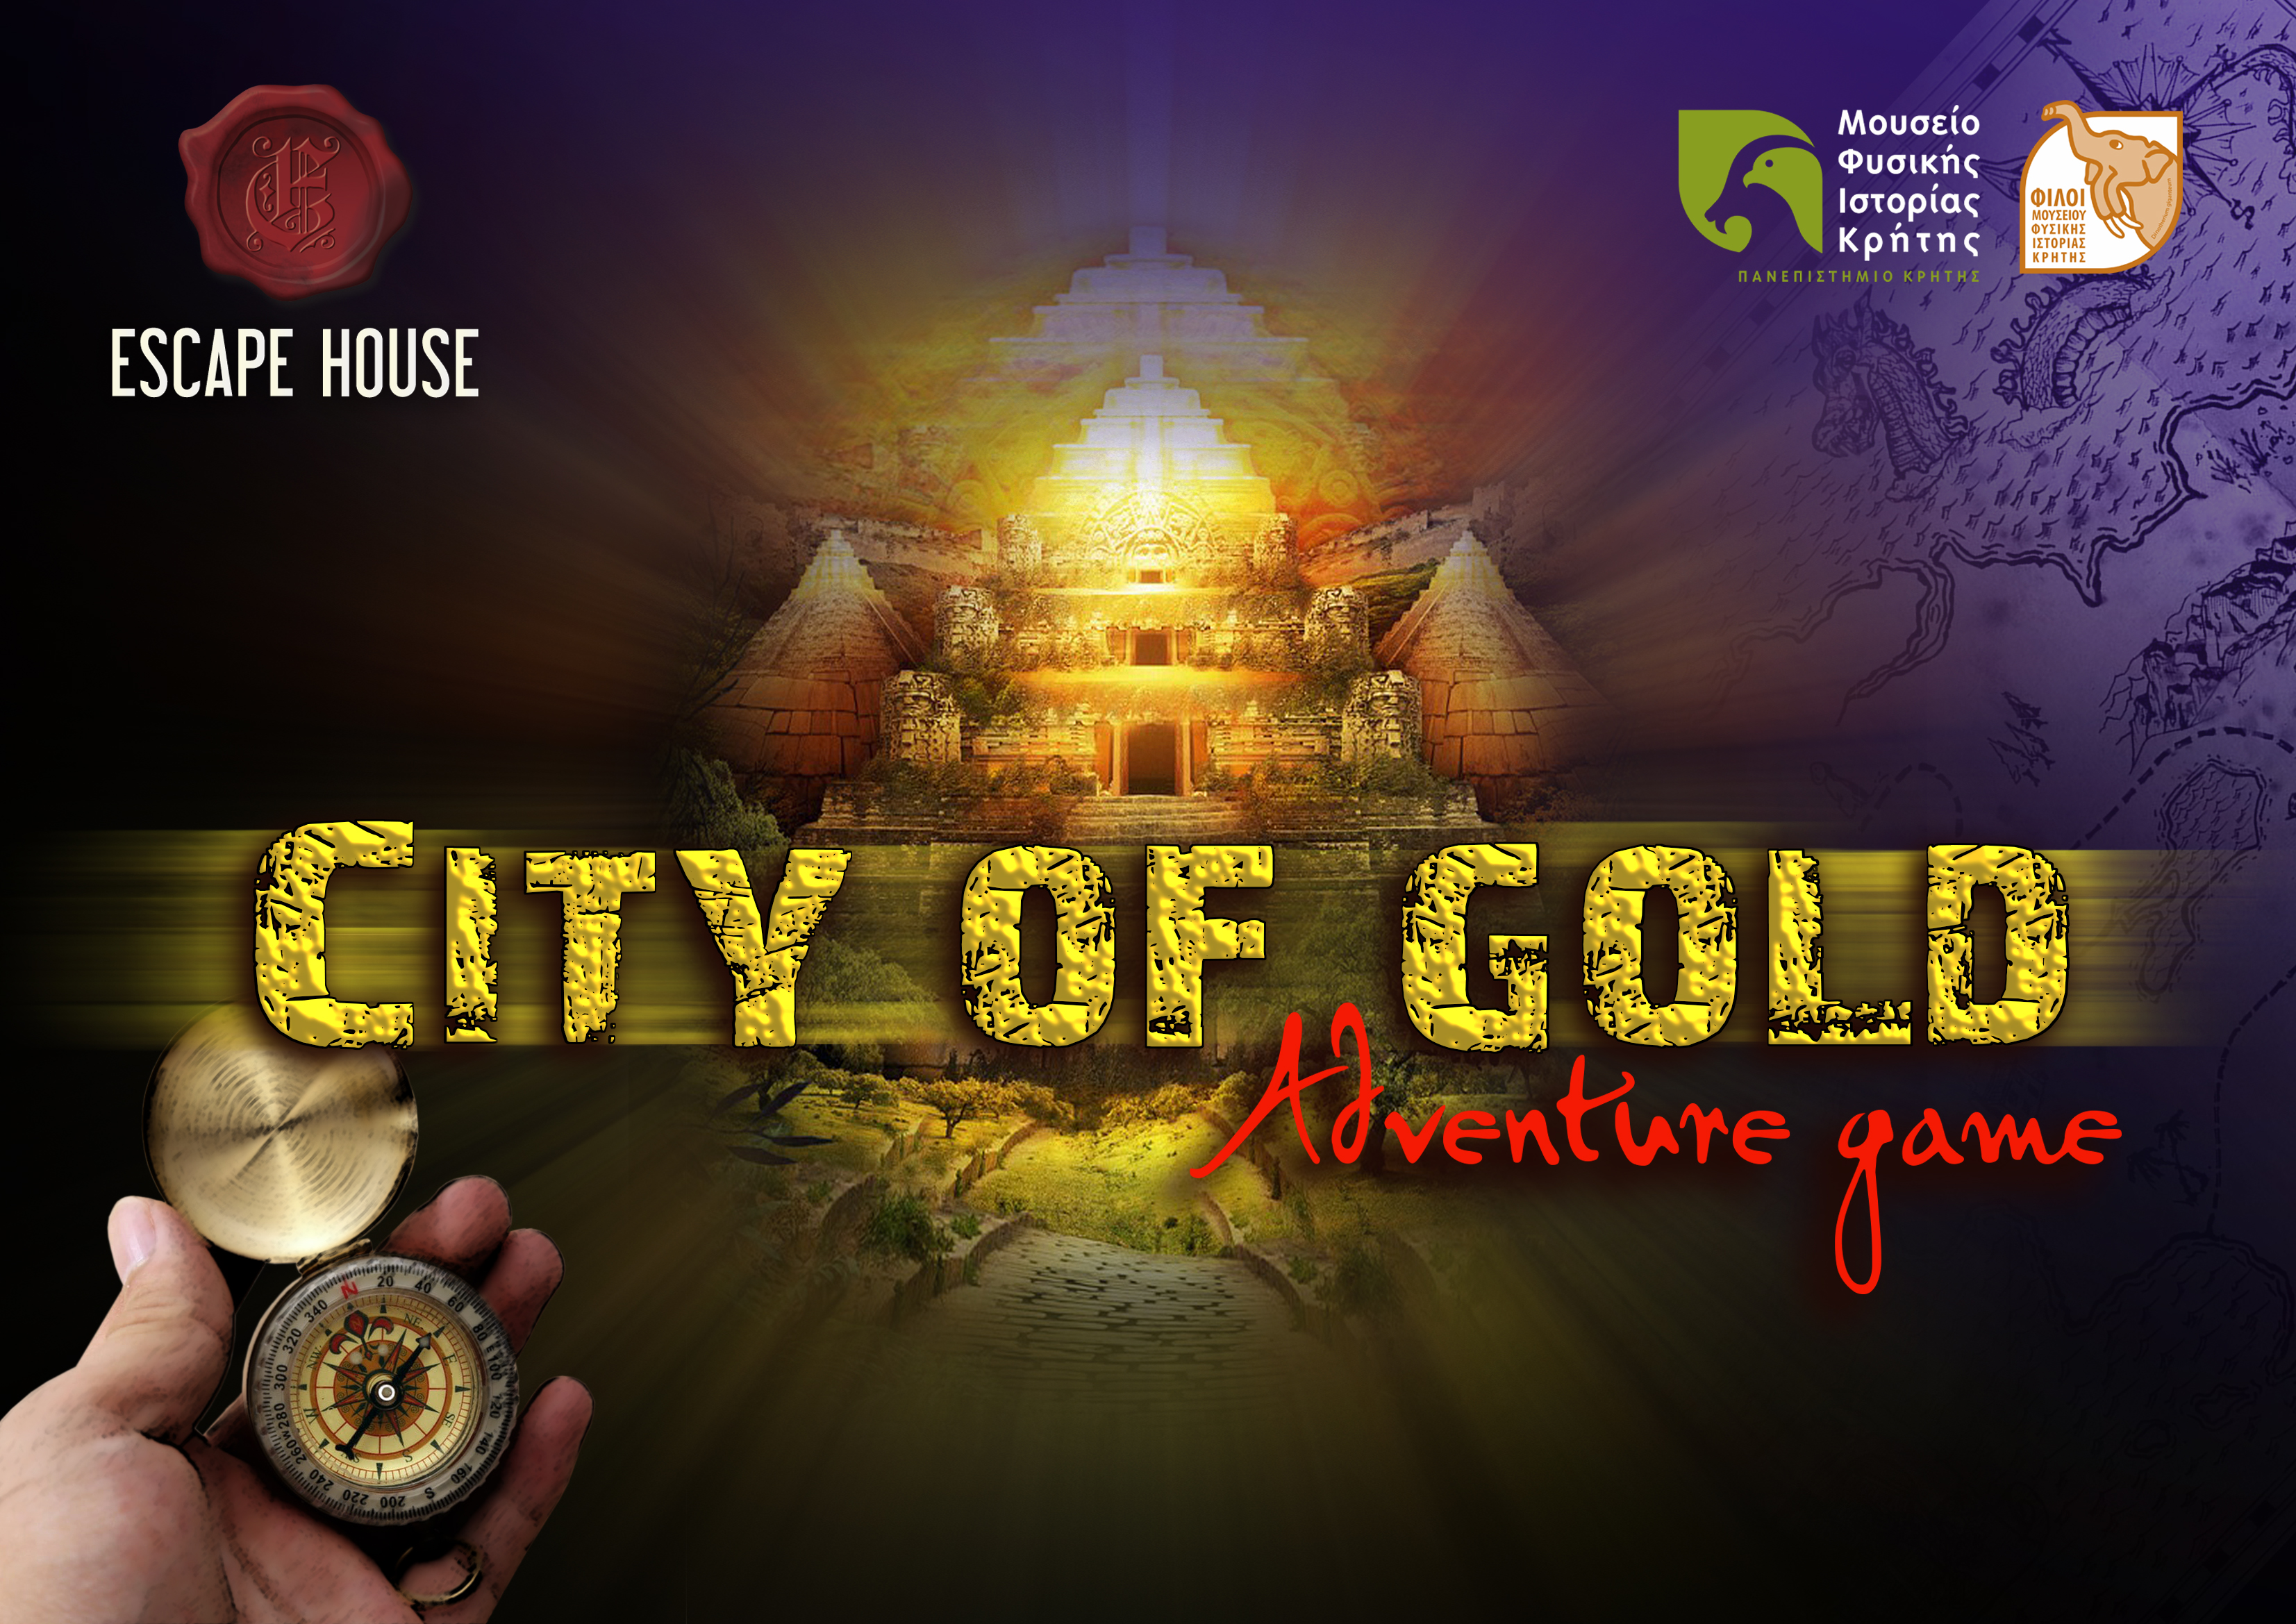 A city of Gold στο Μουσείο Φυσικής Ιστορίας Κρήτης